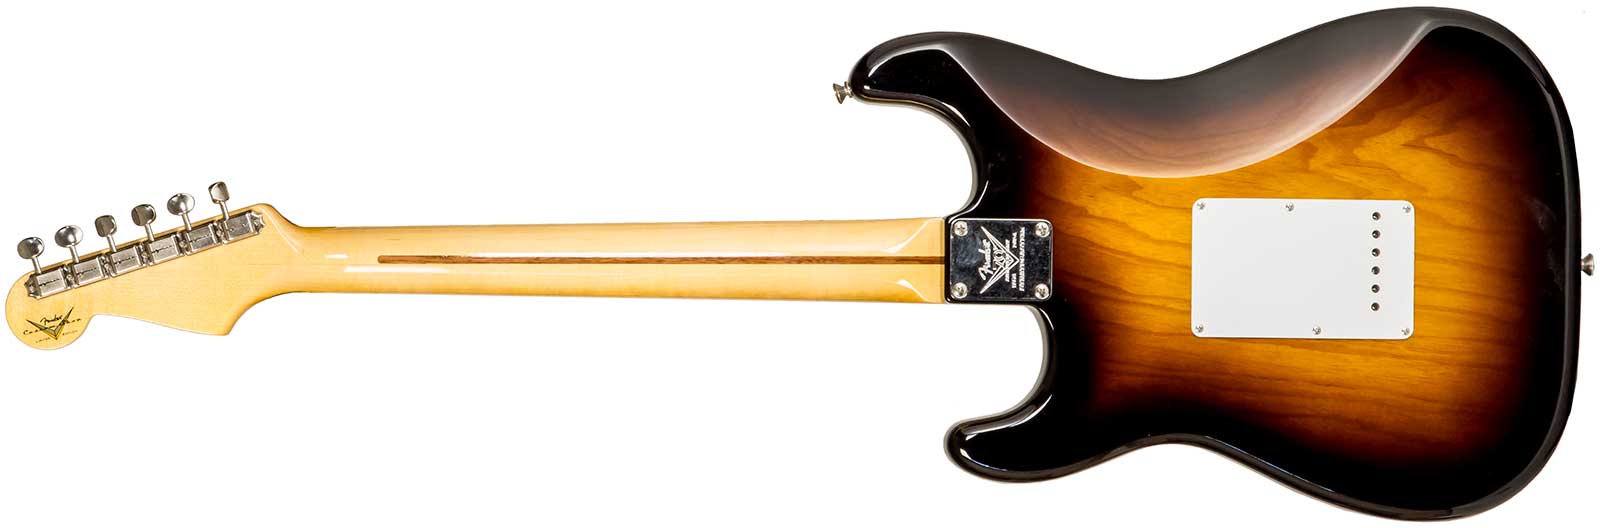 Fender Custom Shop Strat 1954 70th Anniv. #xn4597 3s Trem Mn - Time Capsule 2-color Sunburst - Str shape electric guitar - Variation 1